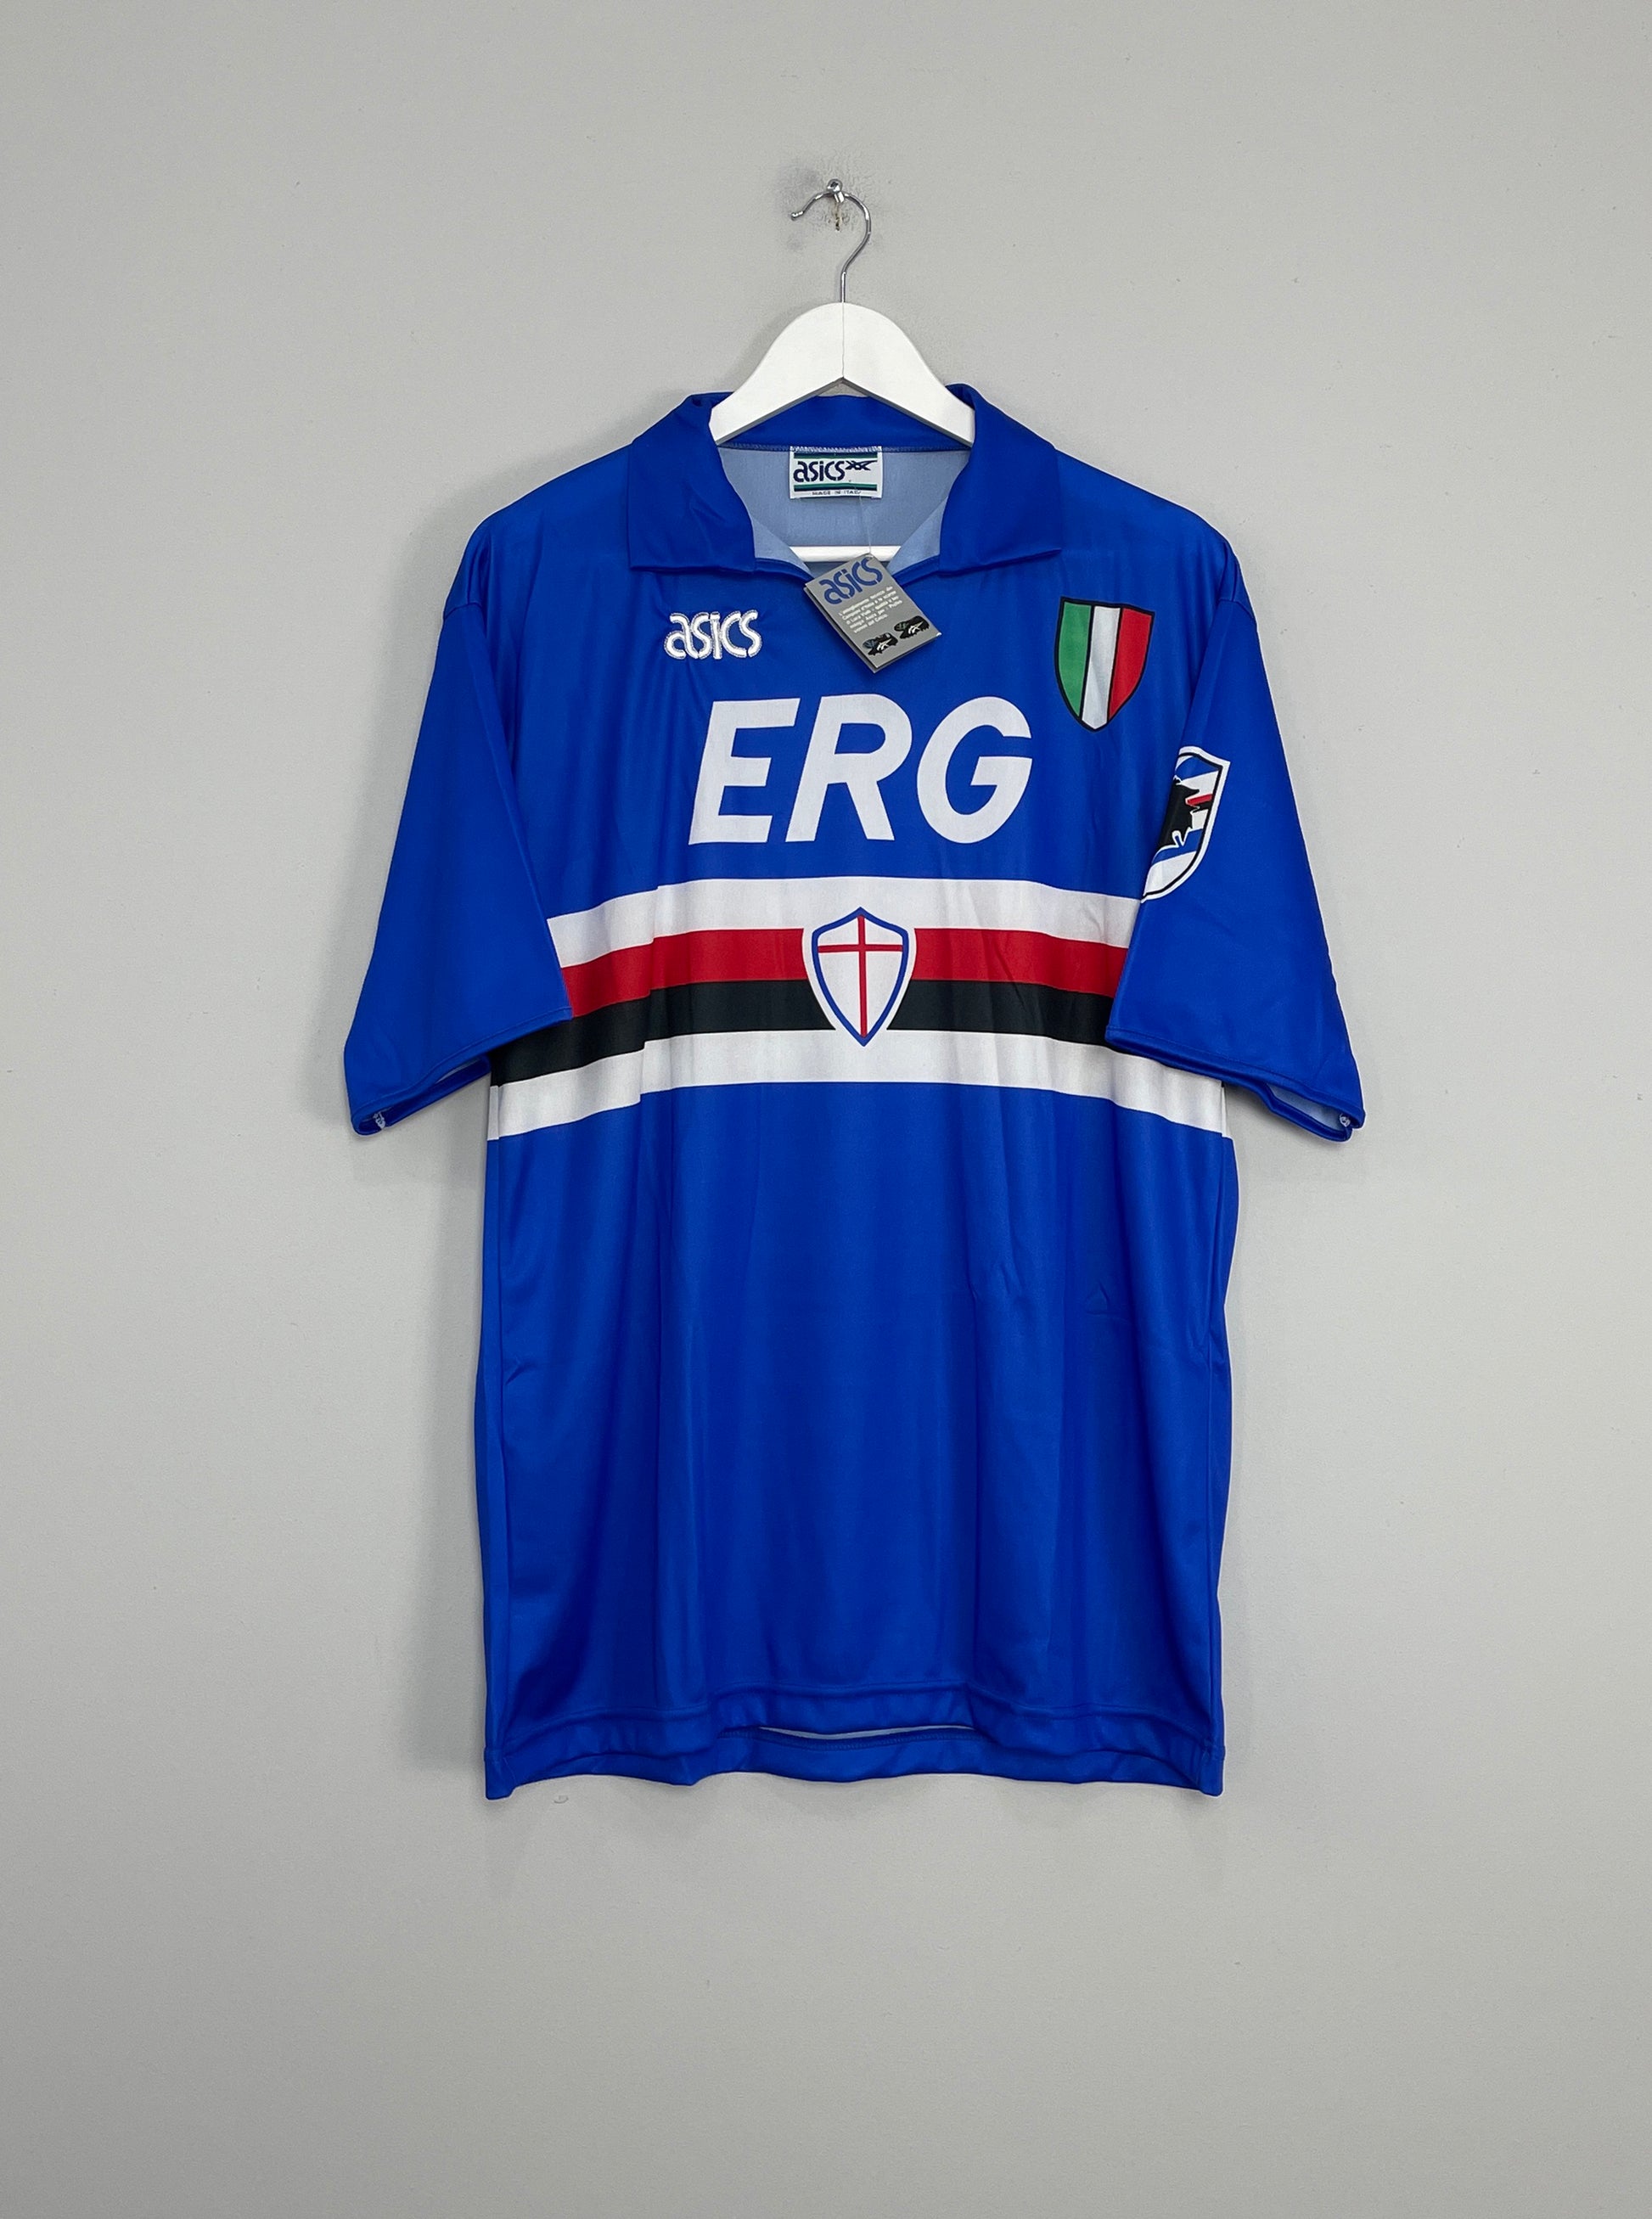 Image of the Sampdoria shirt from the 1991/92 season